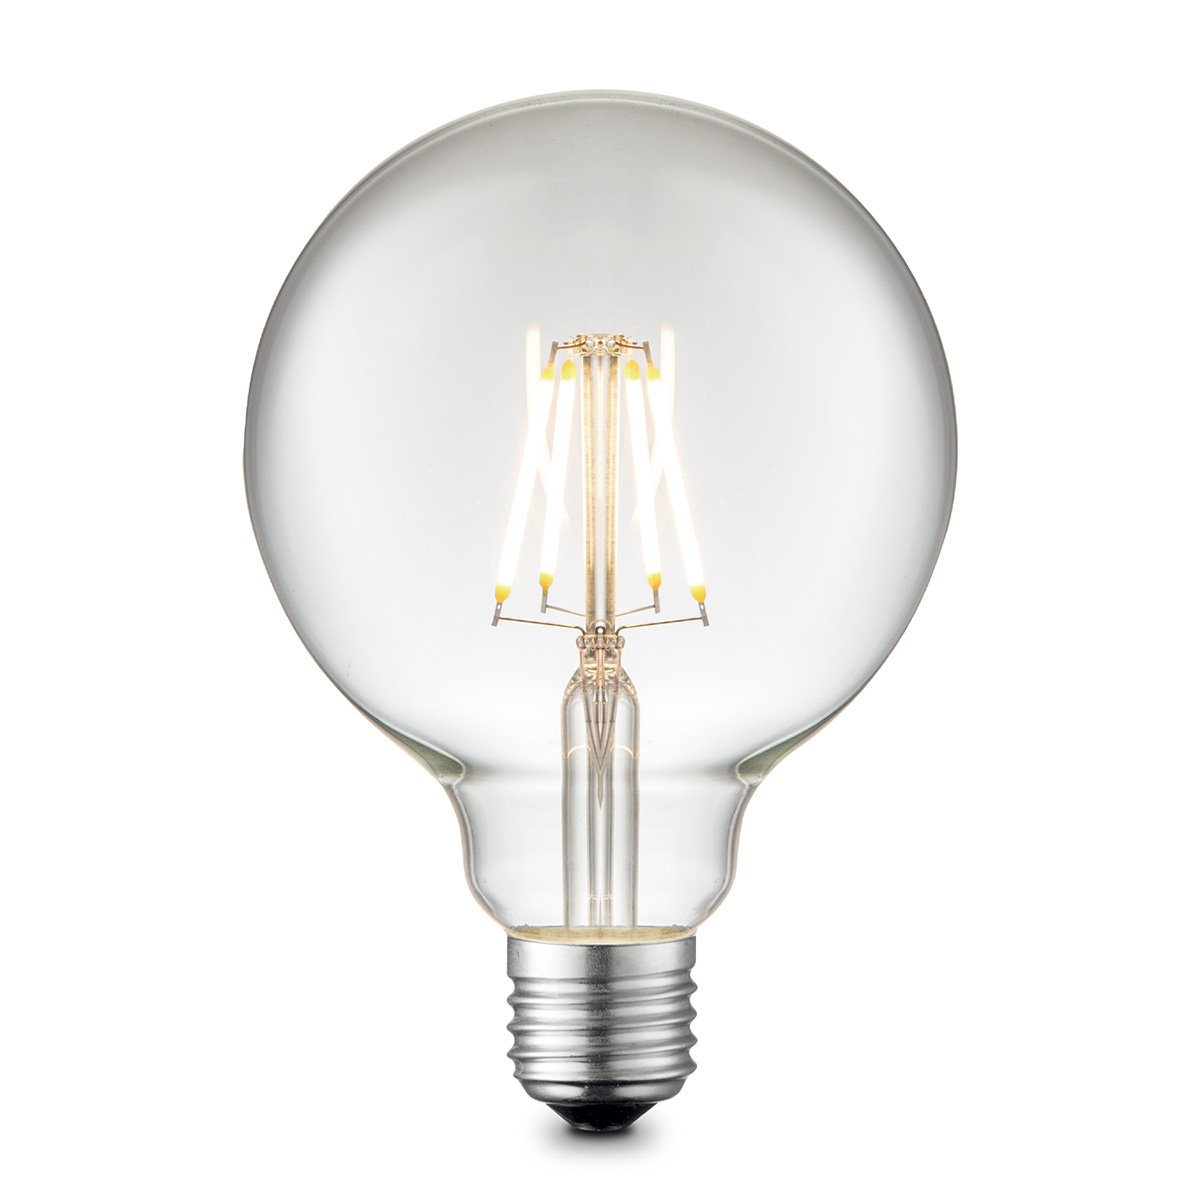 Tangla lighting - TLB-8004-06CL - LED Light Bulb Deco filament - G95 6W clear - dimmable - globe - E27